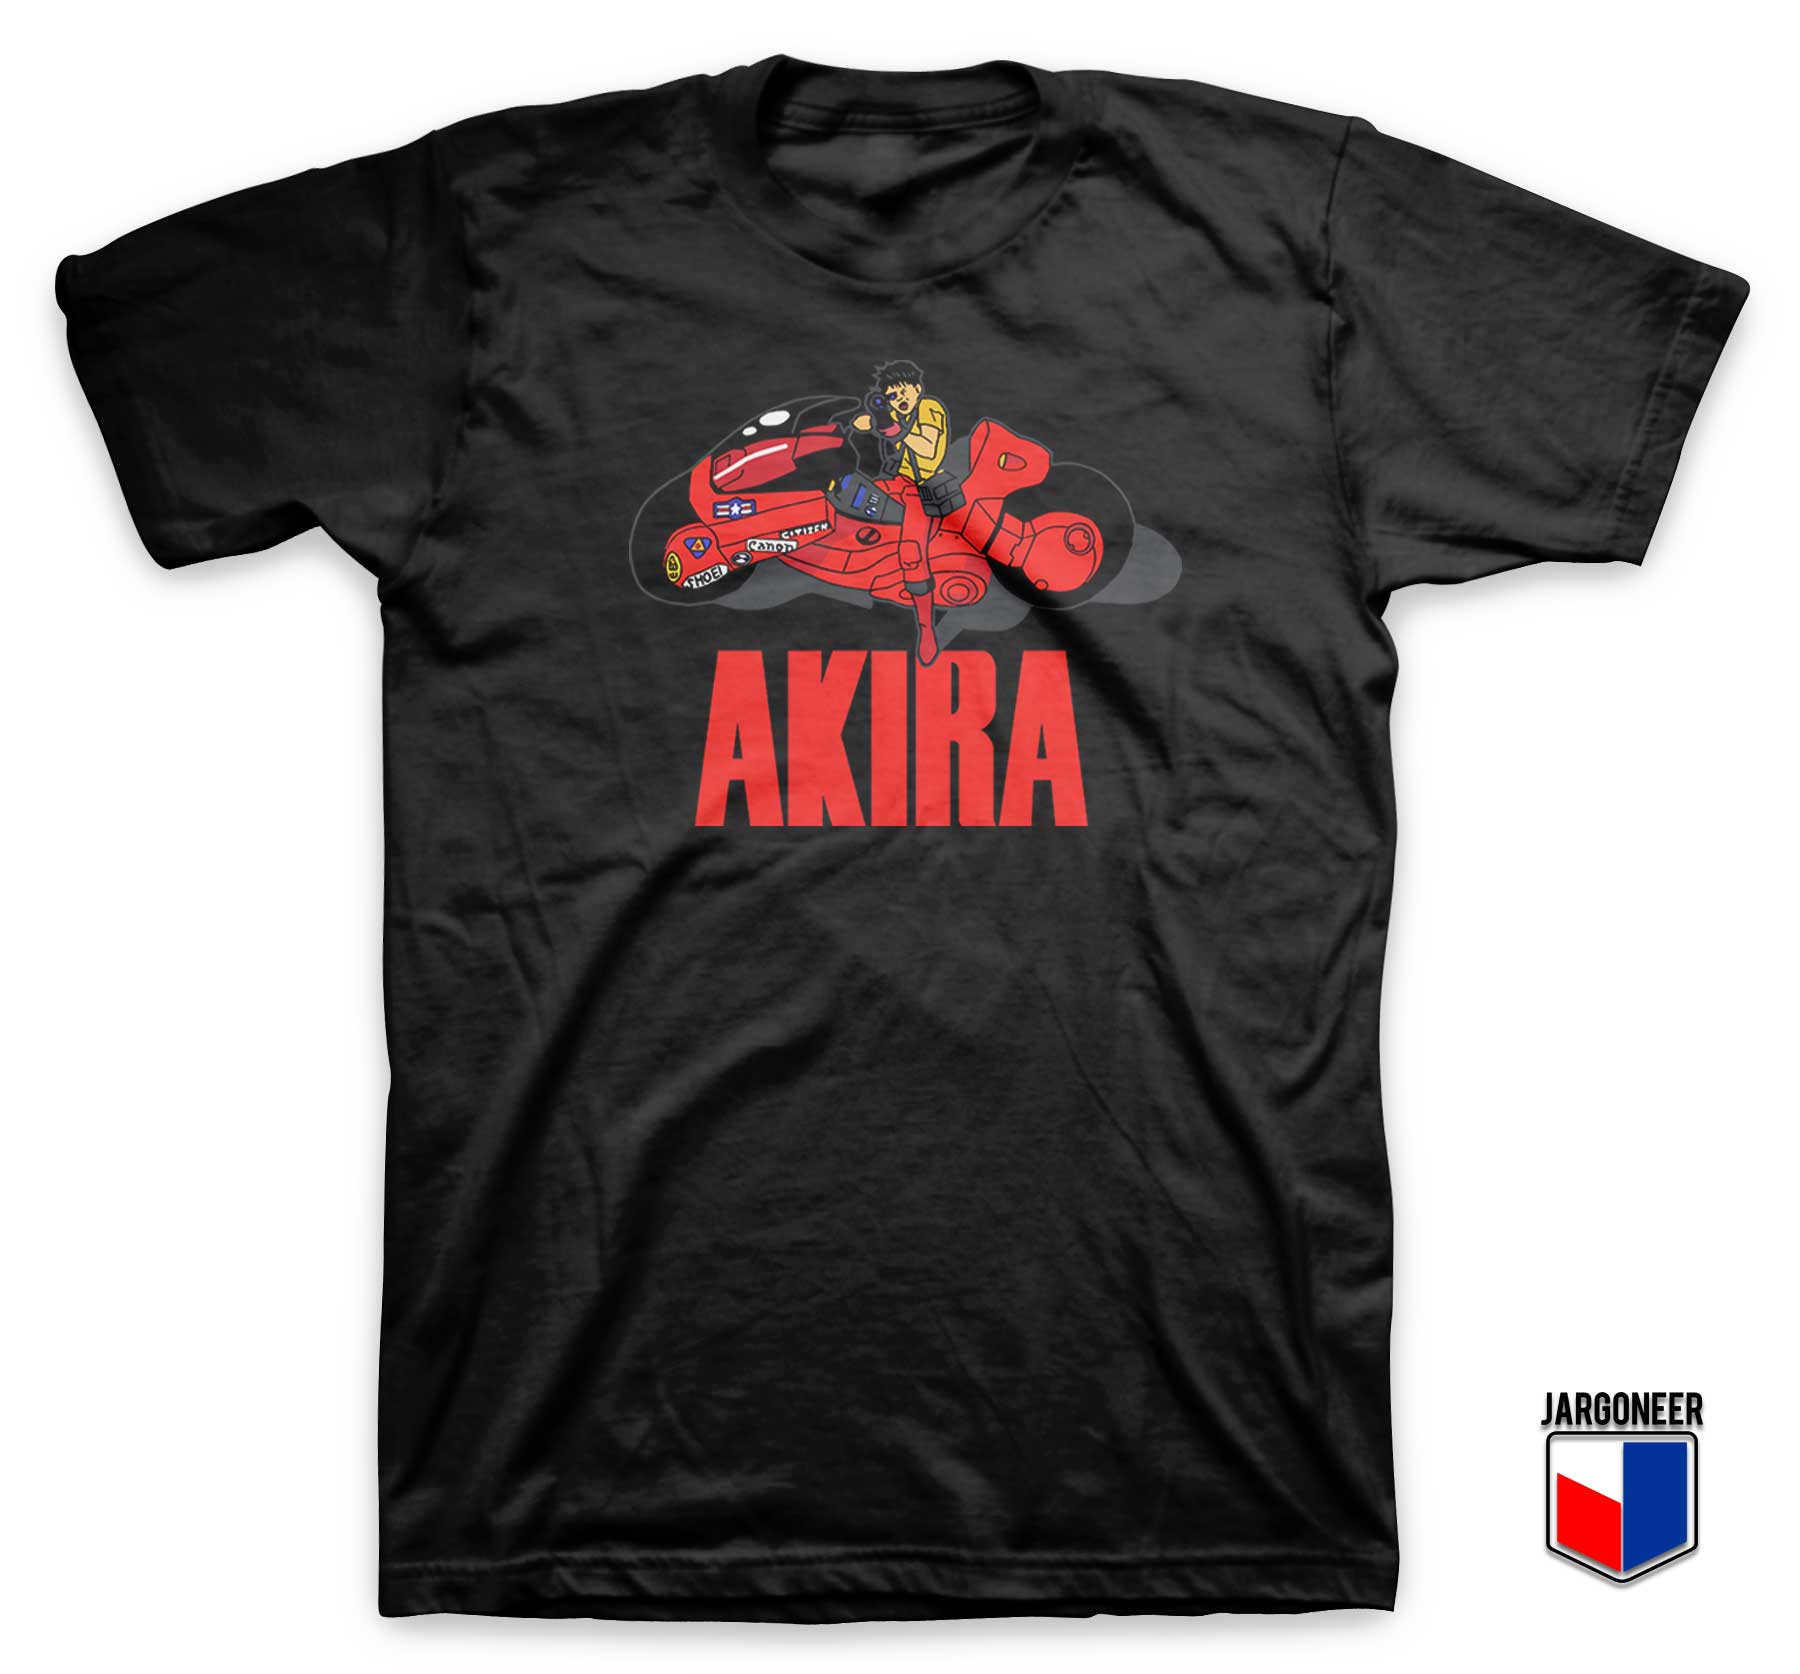 Akira Kaneda Bike T Shirt - Shop Unique Graphic Cool Shirt Designs